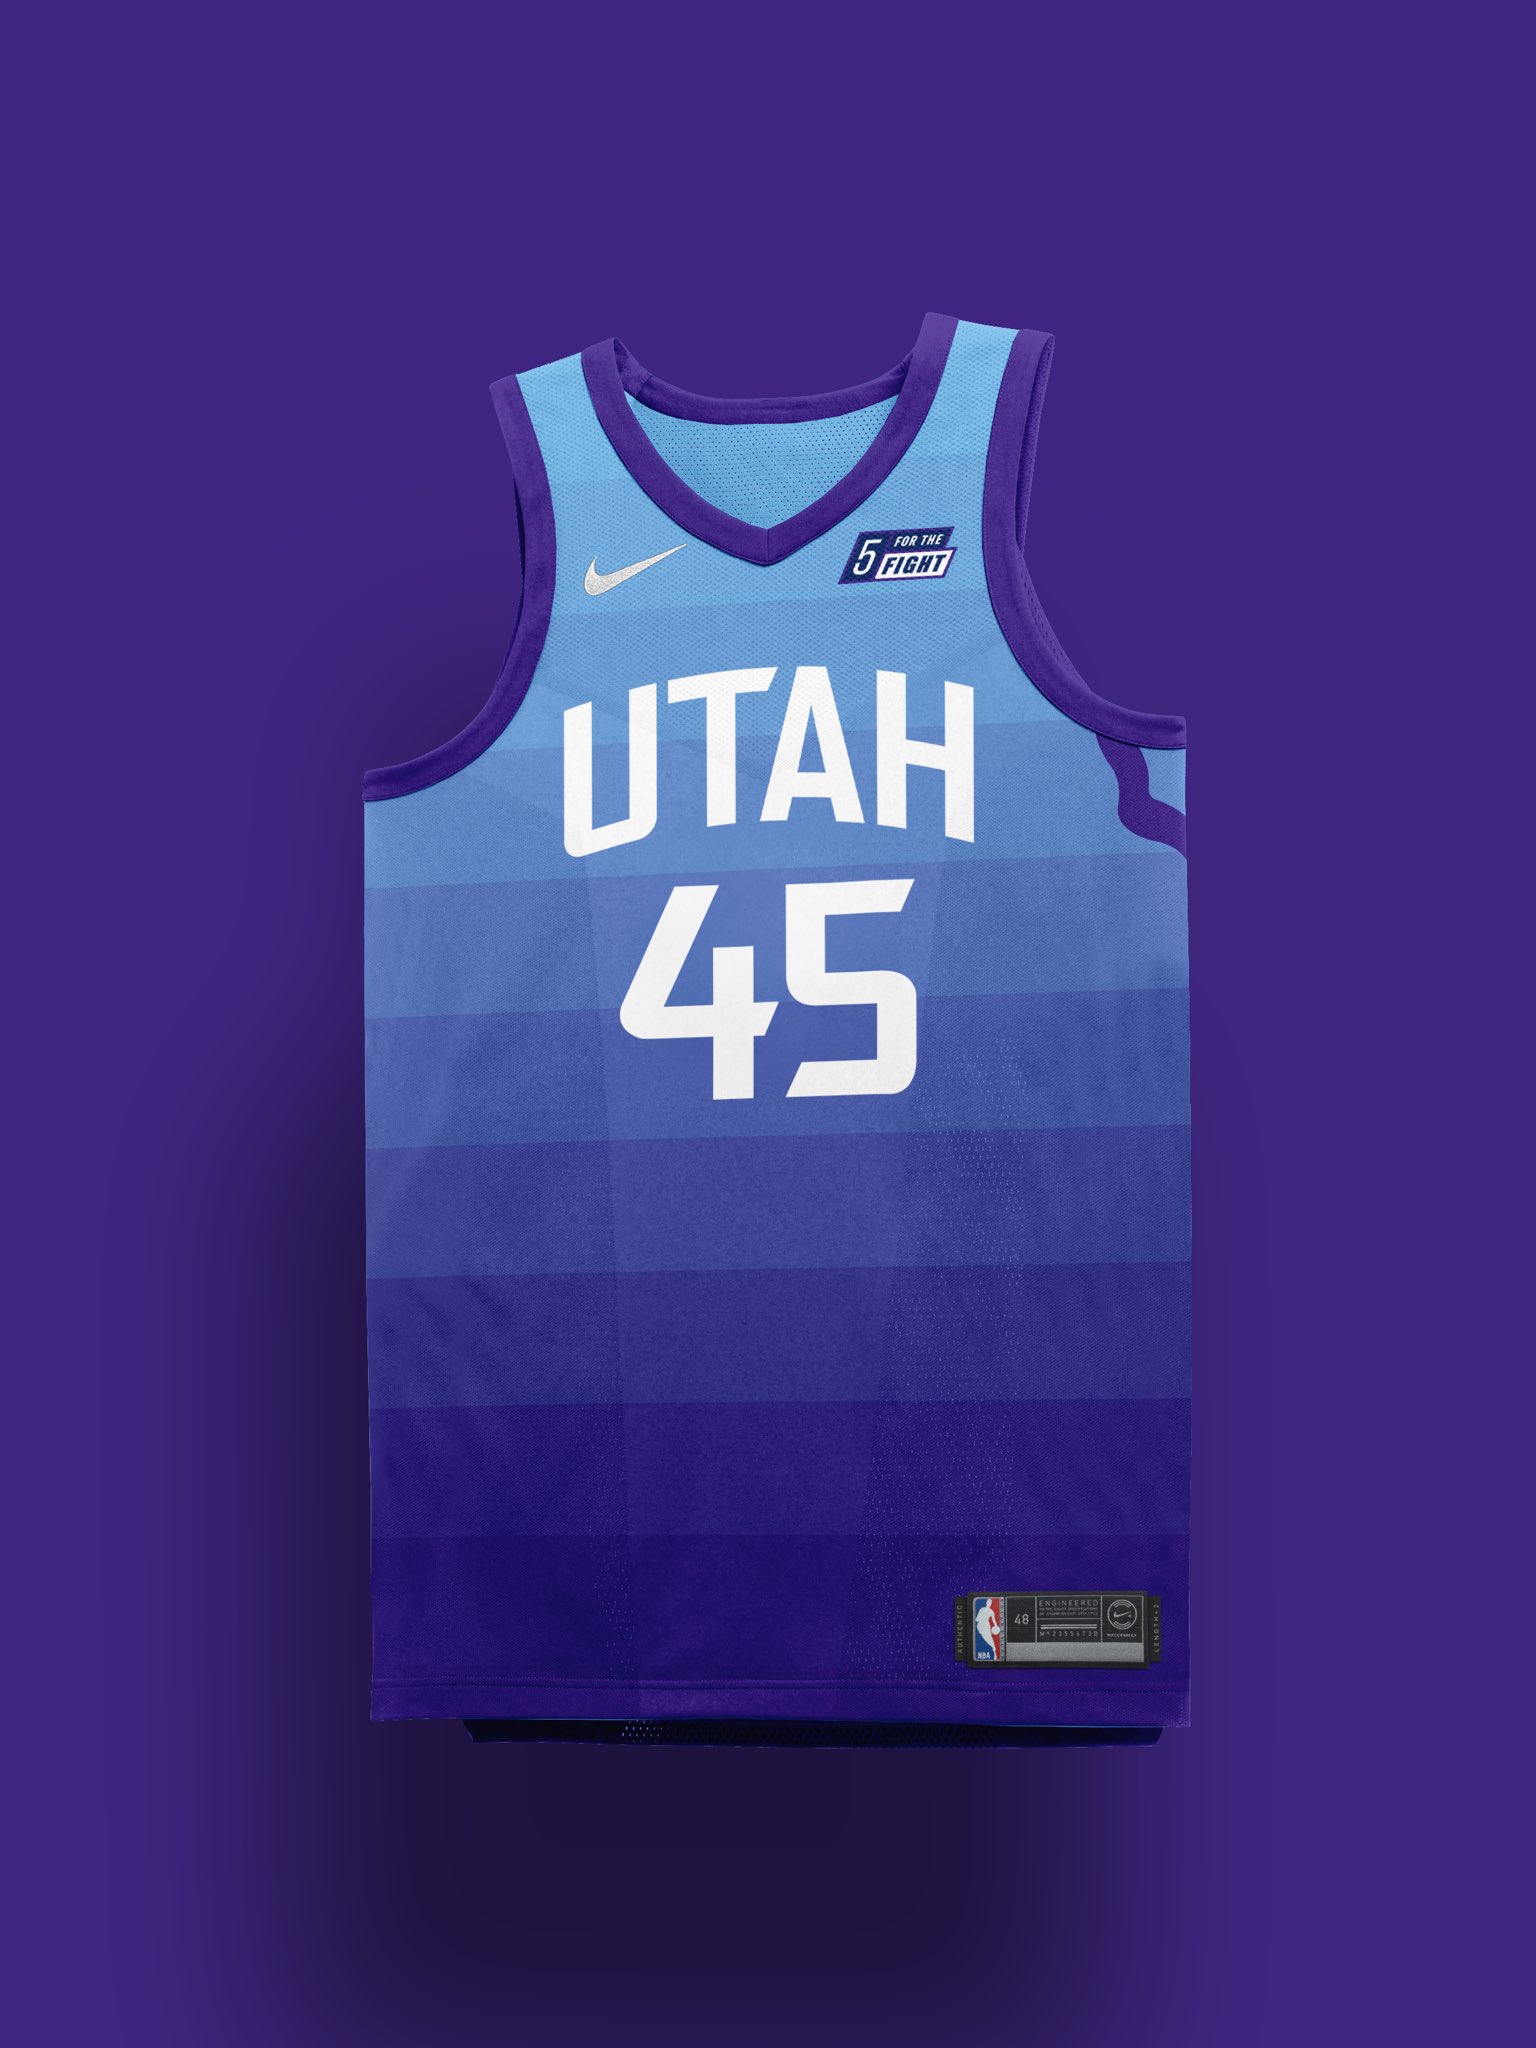 Utah Jazz Jersey Concepts. (Via Djossuppah Art) on twitter. : r